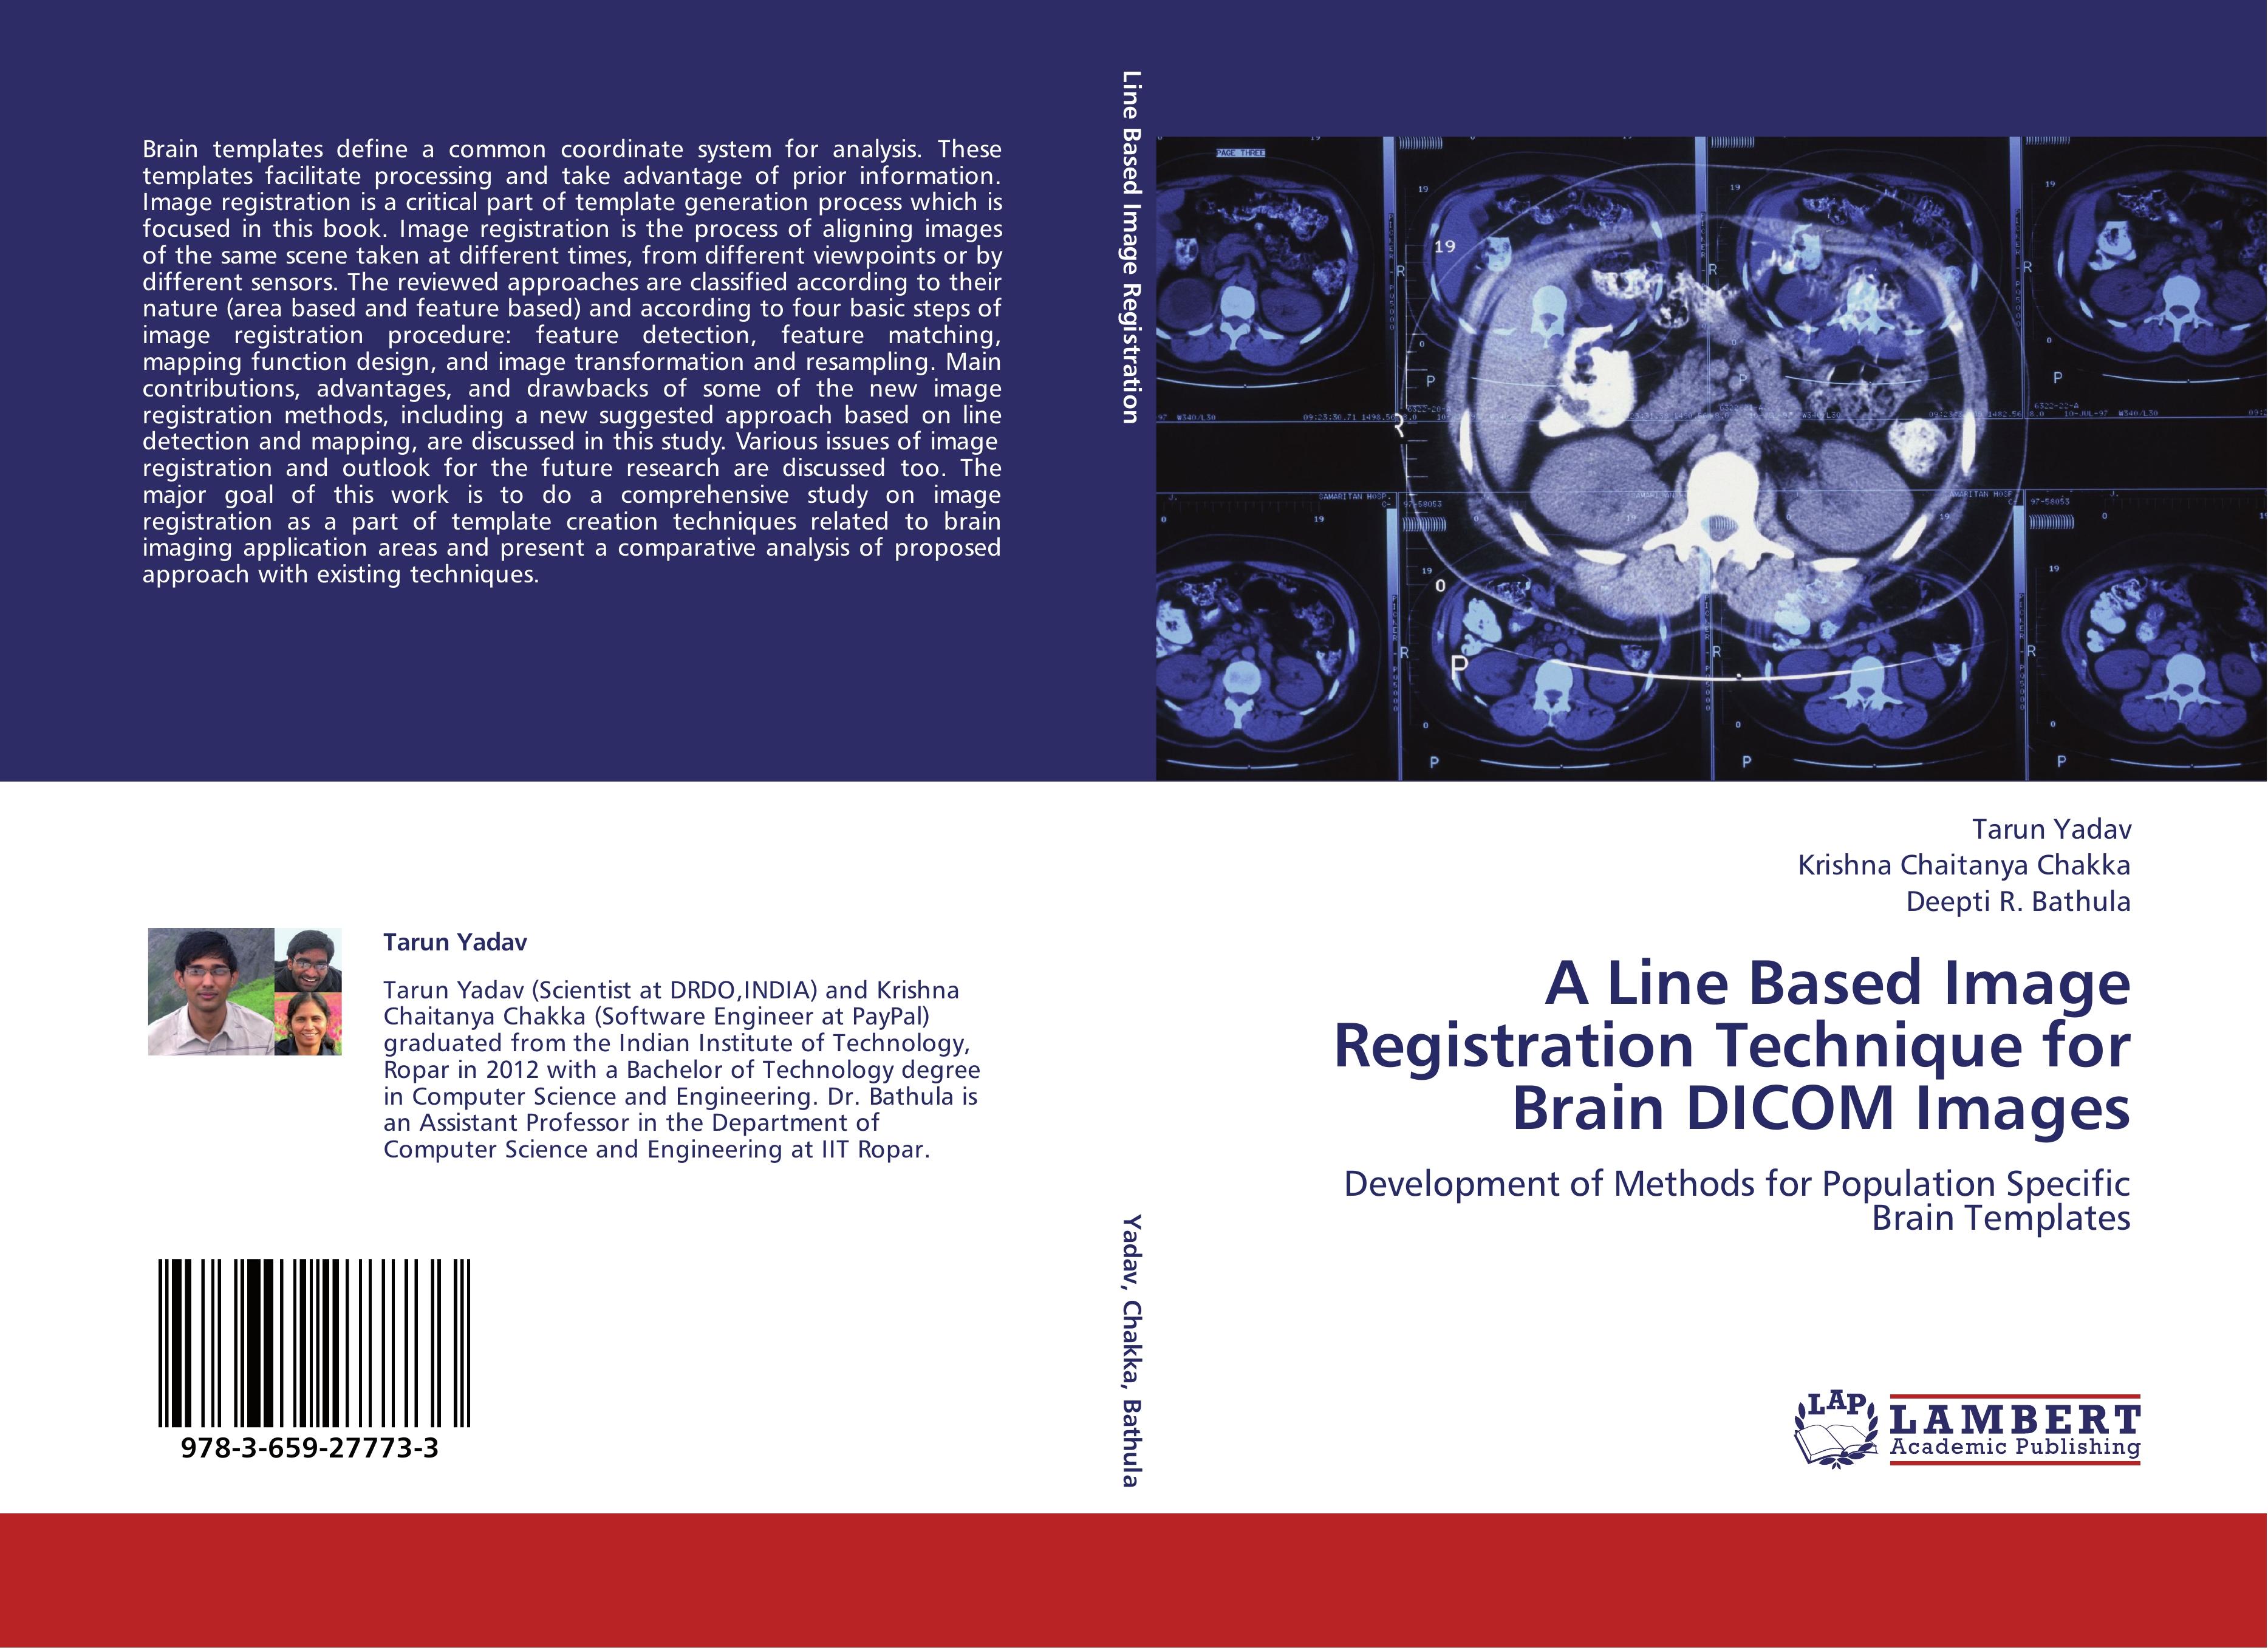 A Line Based Image Registration Technique for Brain DICOM Images - Tarun Yadav|Krishna Chaitanya Chakka|Deepti R. Bathula